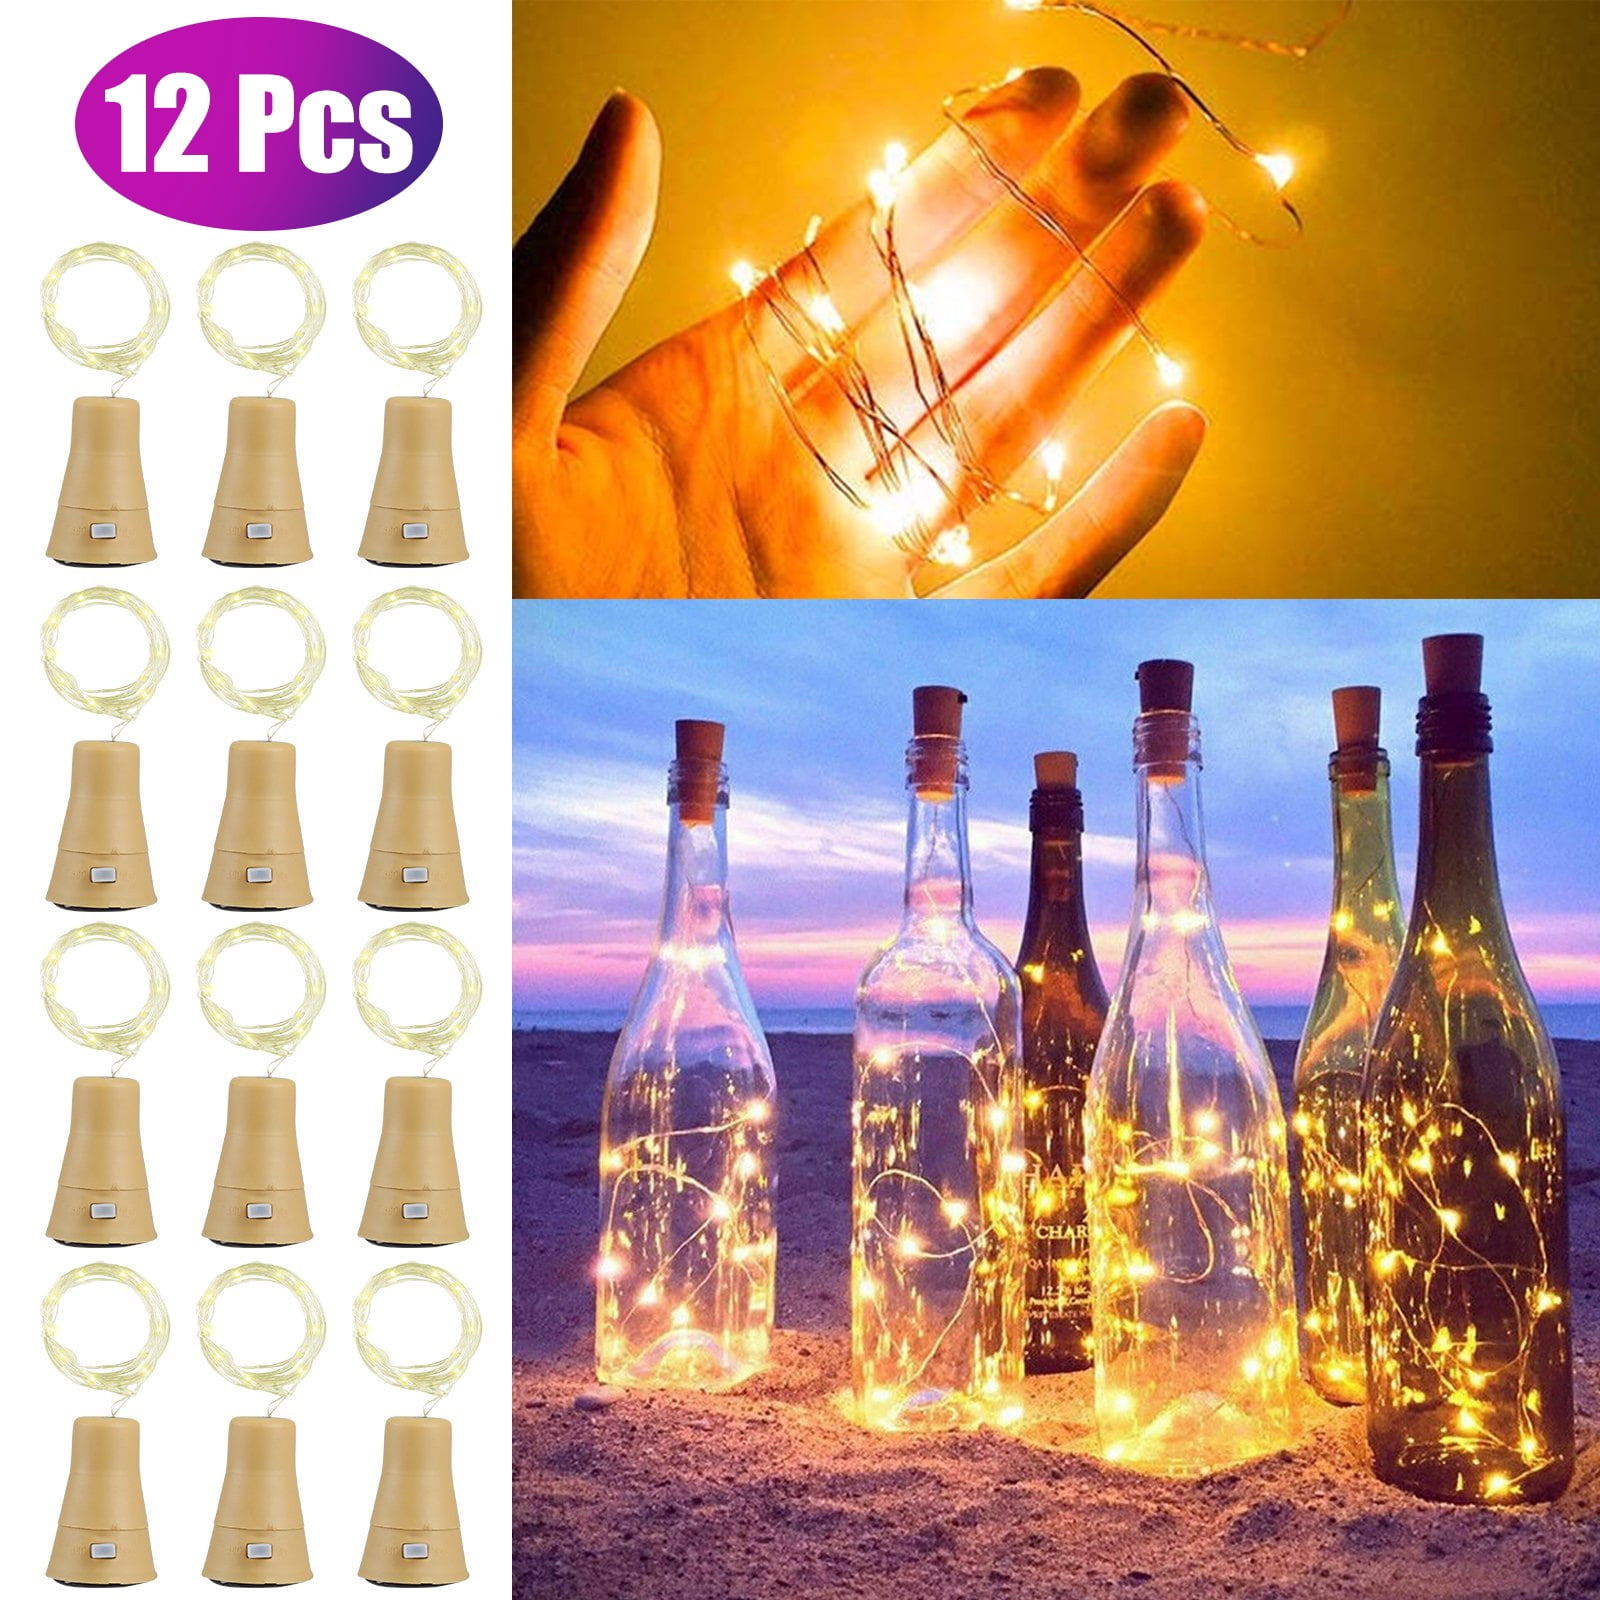 155A Bottle Stopper Light Strings Copper Wire Party Decorative Lamp Multicolor 